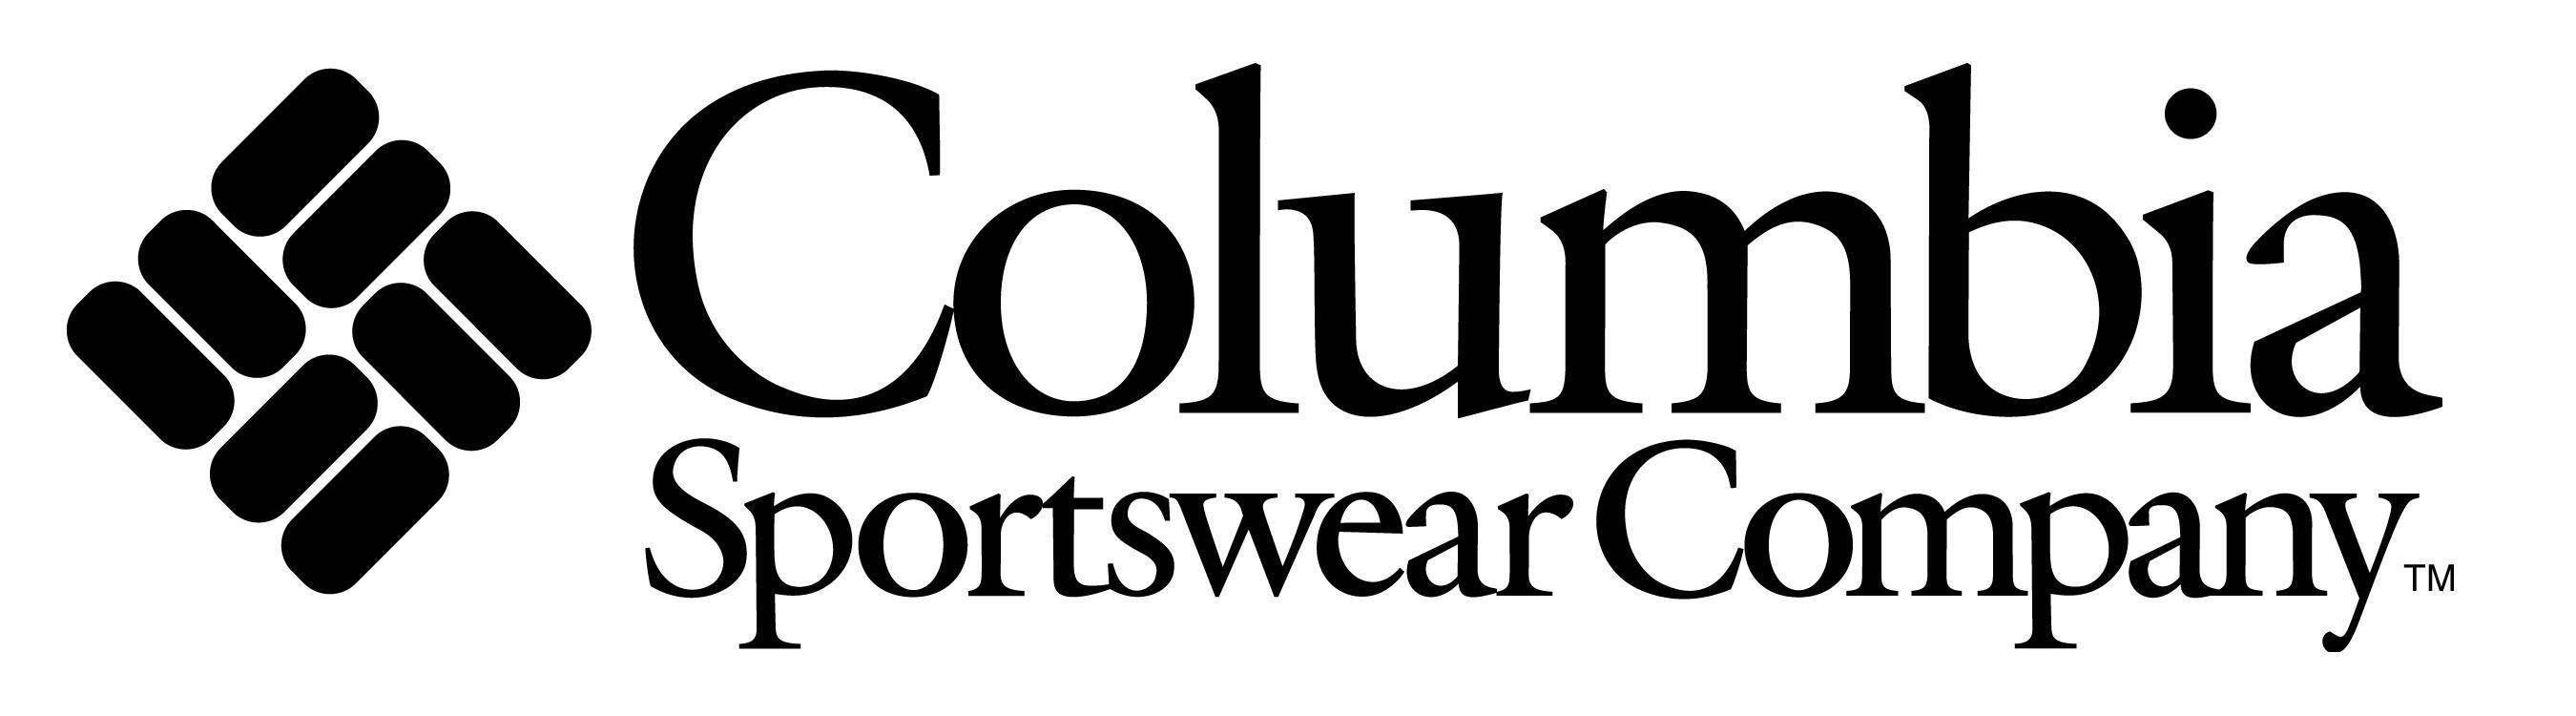 Columbia Sportswear Logo - columbia sportswear logo - Google Search | Corporate Logos Again ...